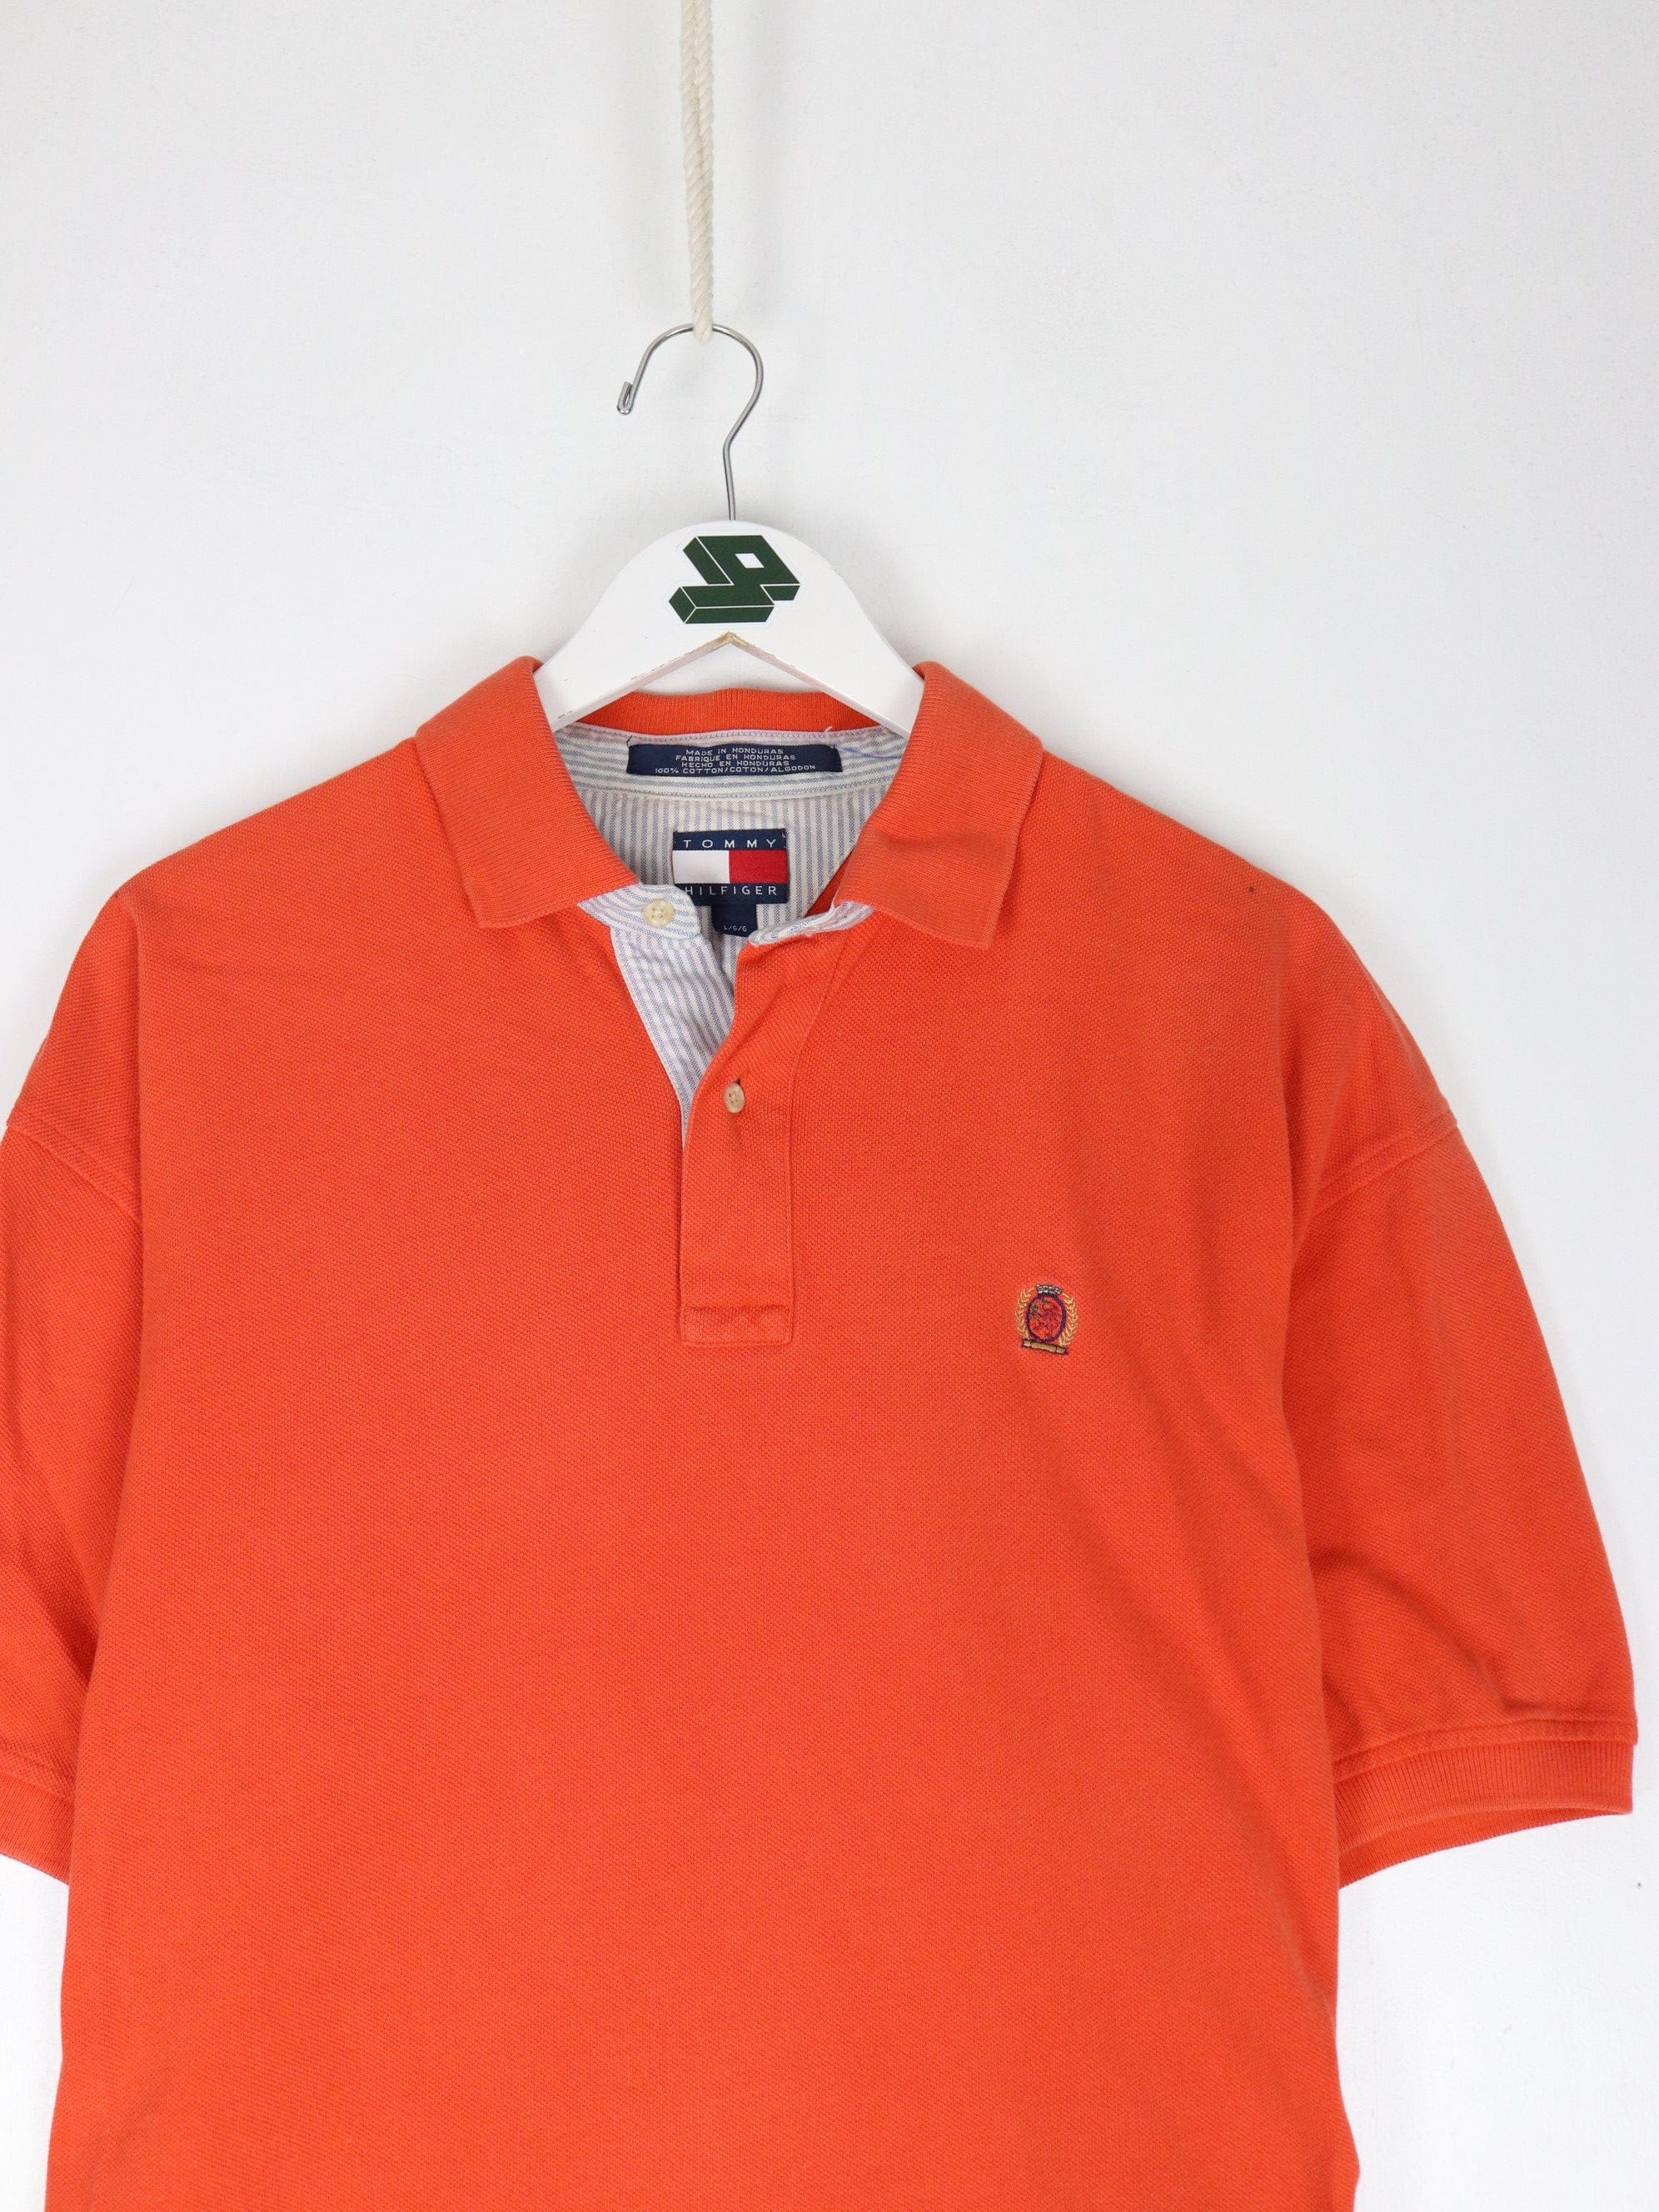 Vintage Tommy Hilfiger Polo Shirt Mens Large Orange Casual